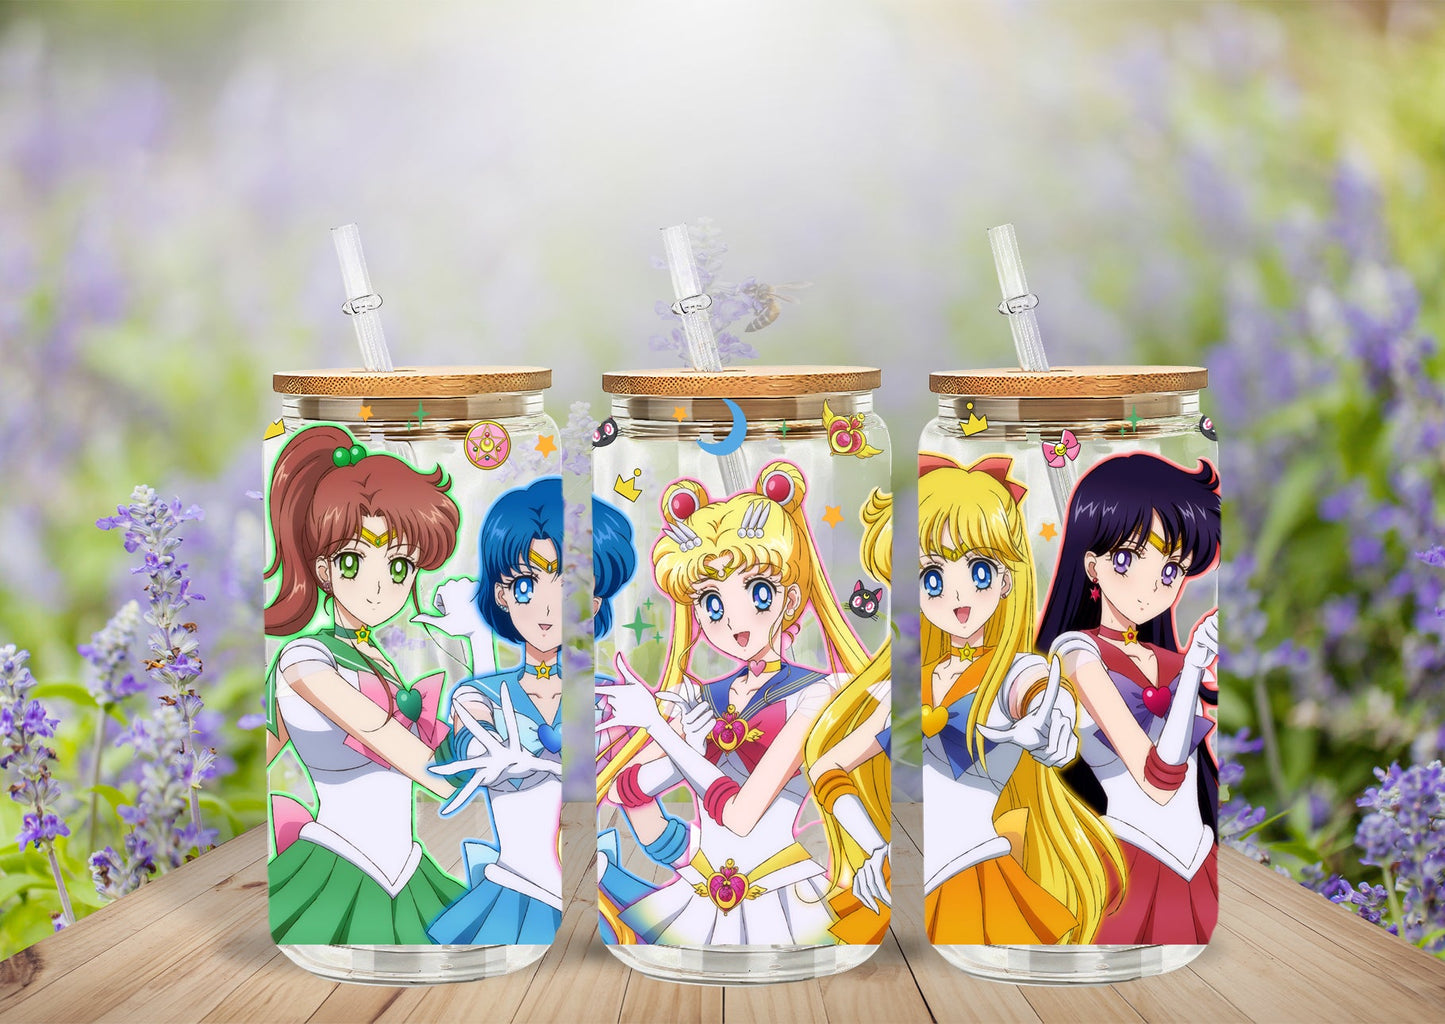 Anime Sailor Girls Tumbler Wrap, Libbey 16ozGlass Can Design, Anime Tumbler - Sublimation Design Digital Download - PNG Active - VartDigitals